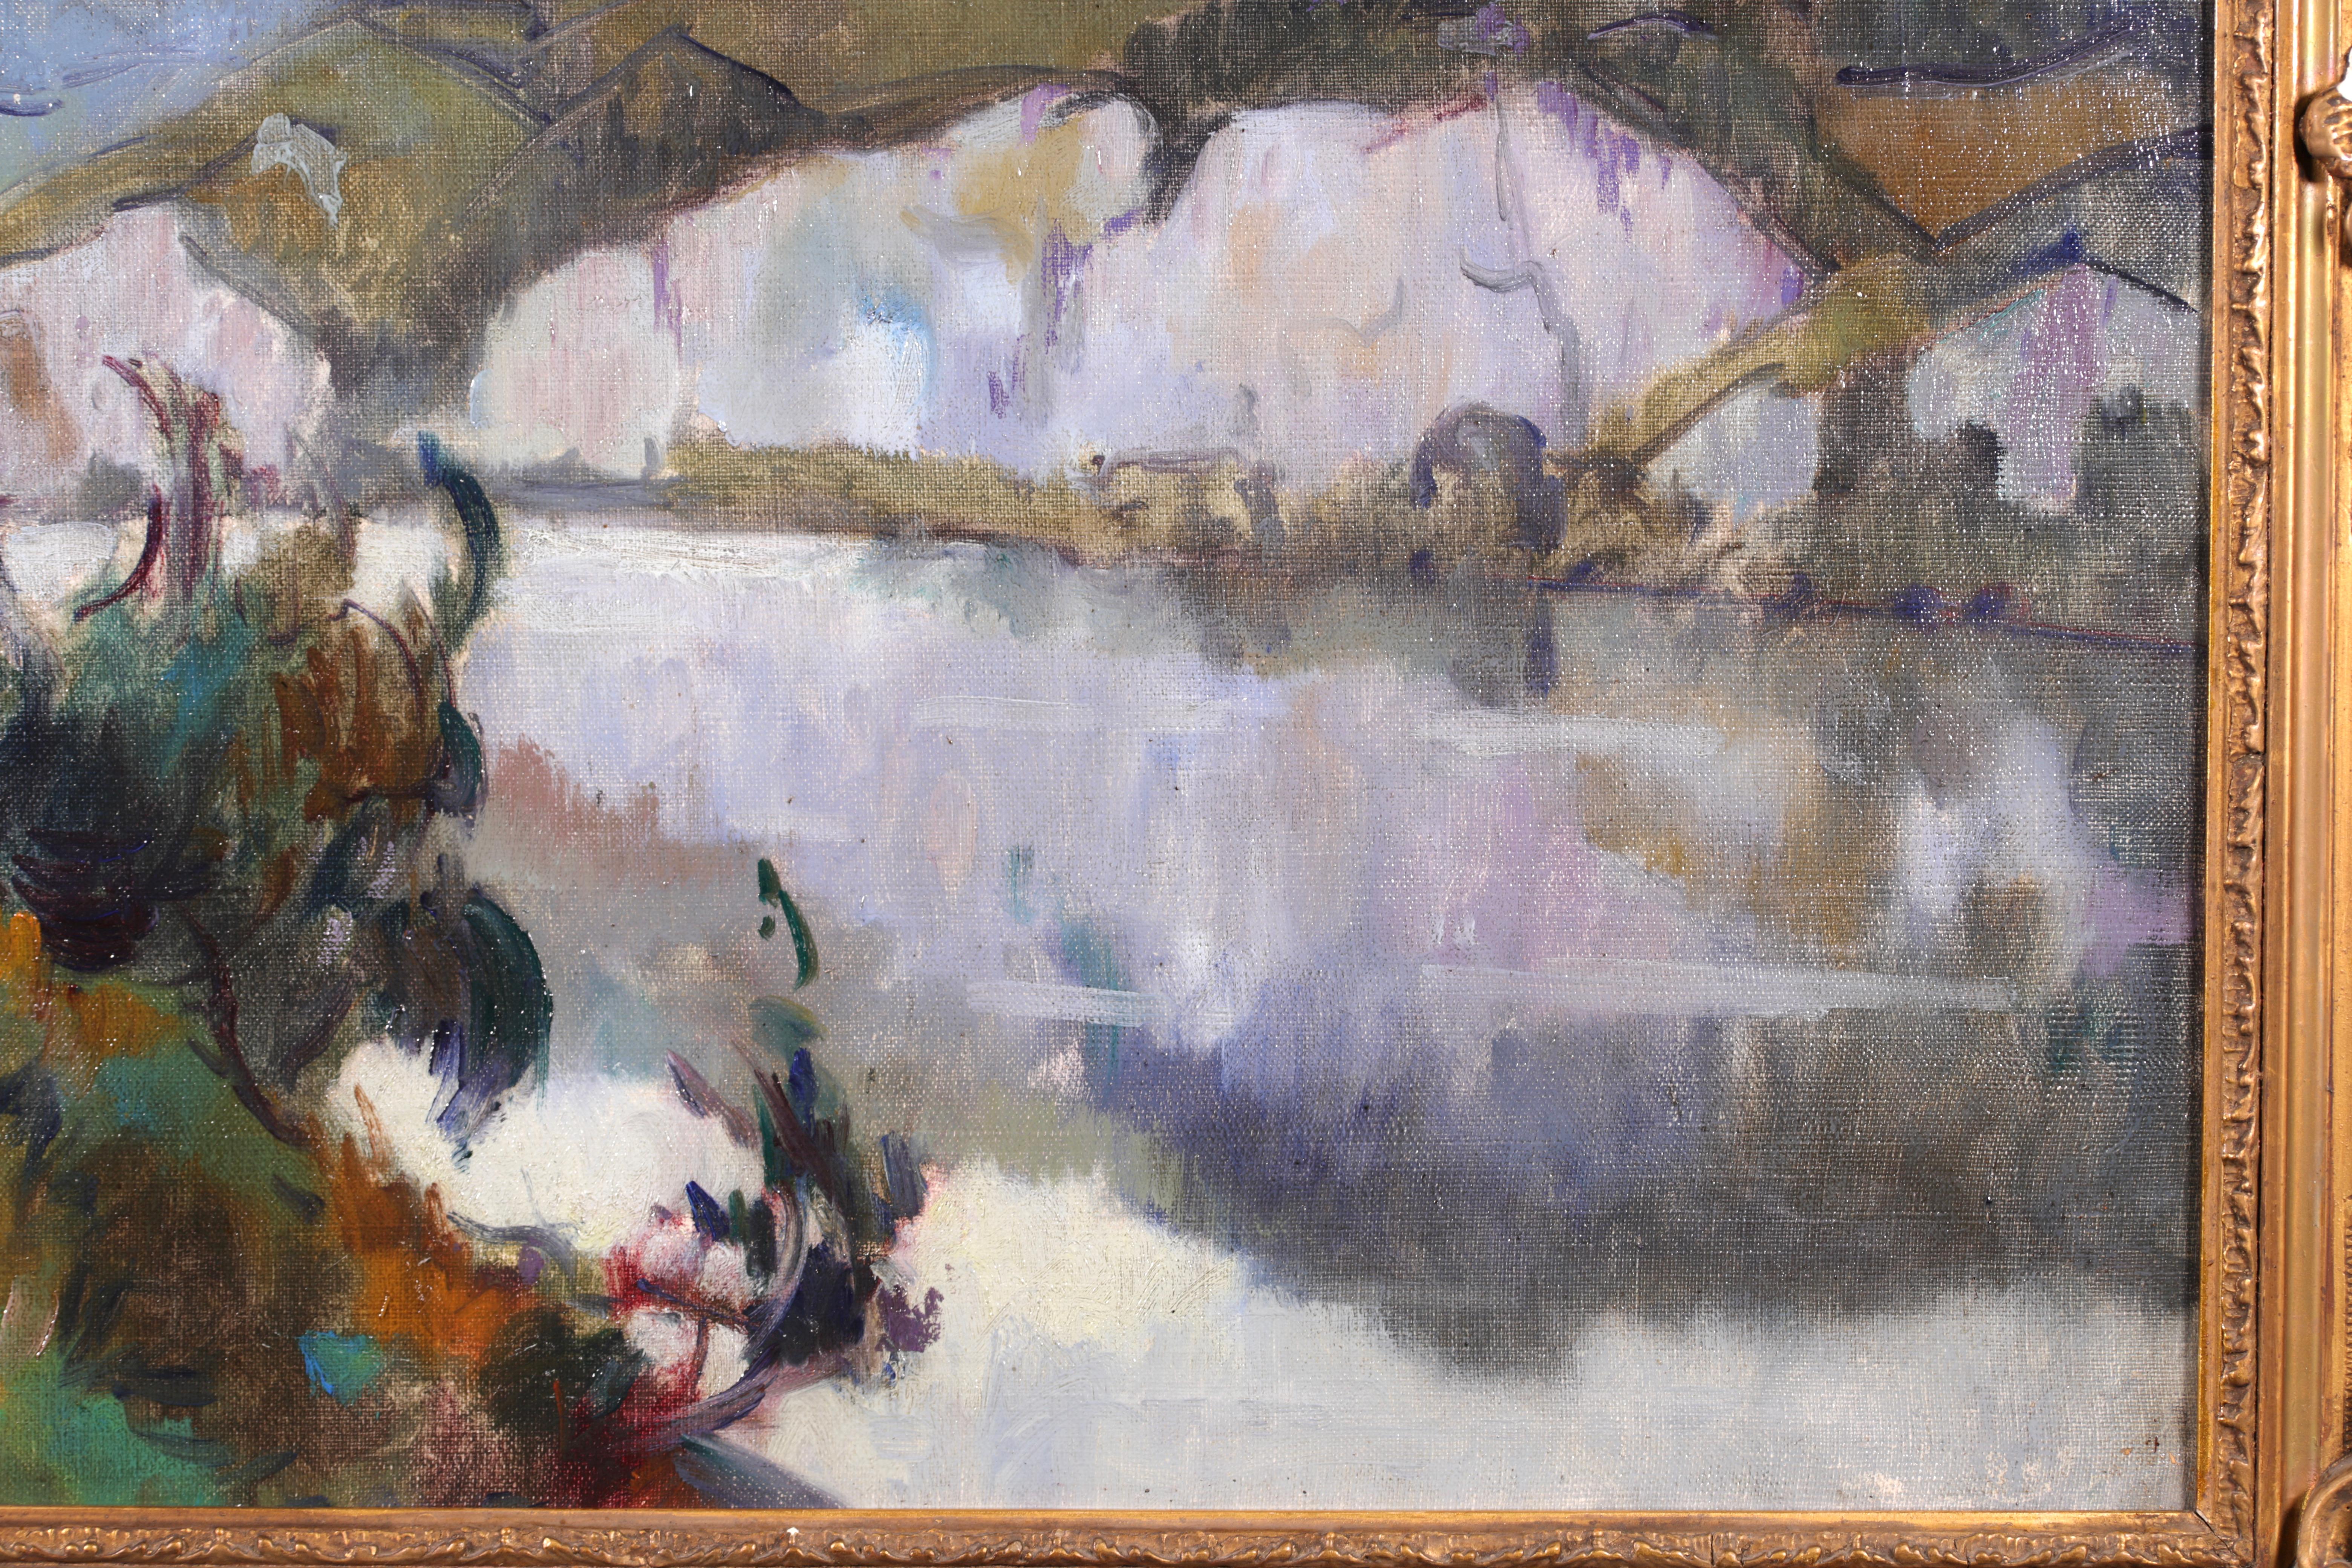 La Seine - Post Impressionist Fauvist Oil, River Landscape by Robert Pinchon - Brown Landscape Painting by Robert Antoine Pinchon